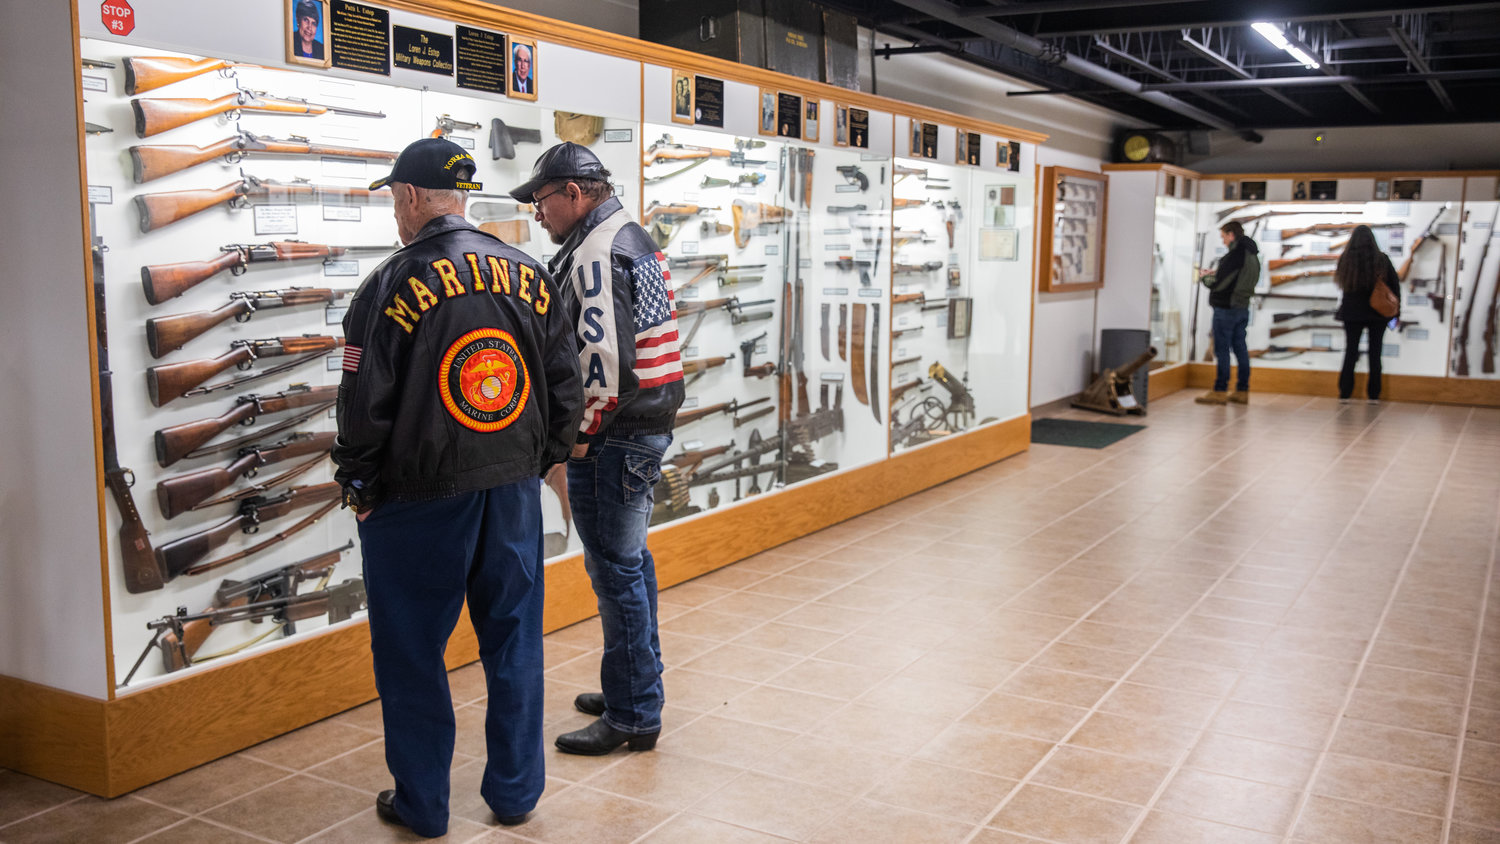 Visitors tour the Veterans Memorial Museum on Veterans Day.